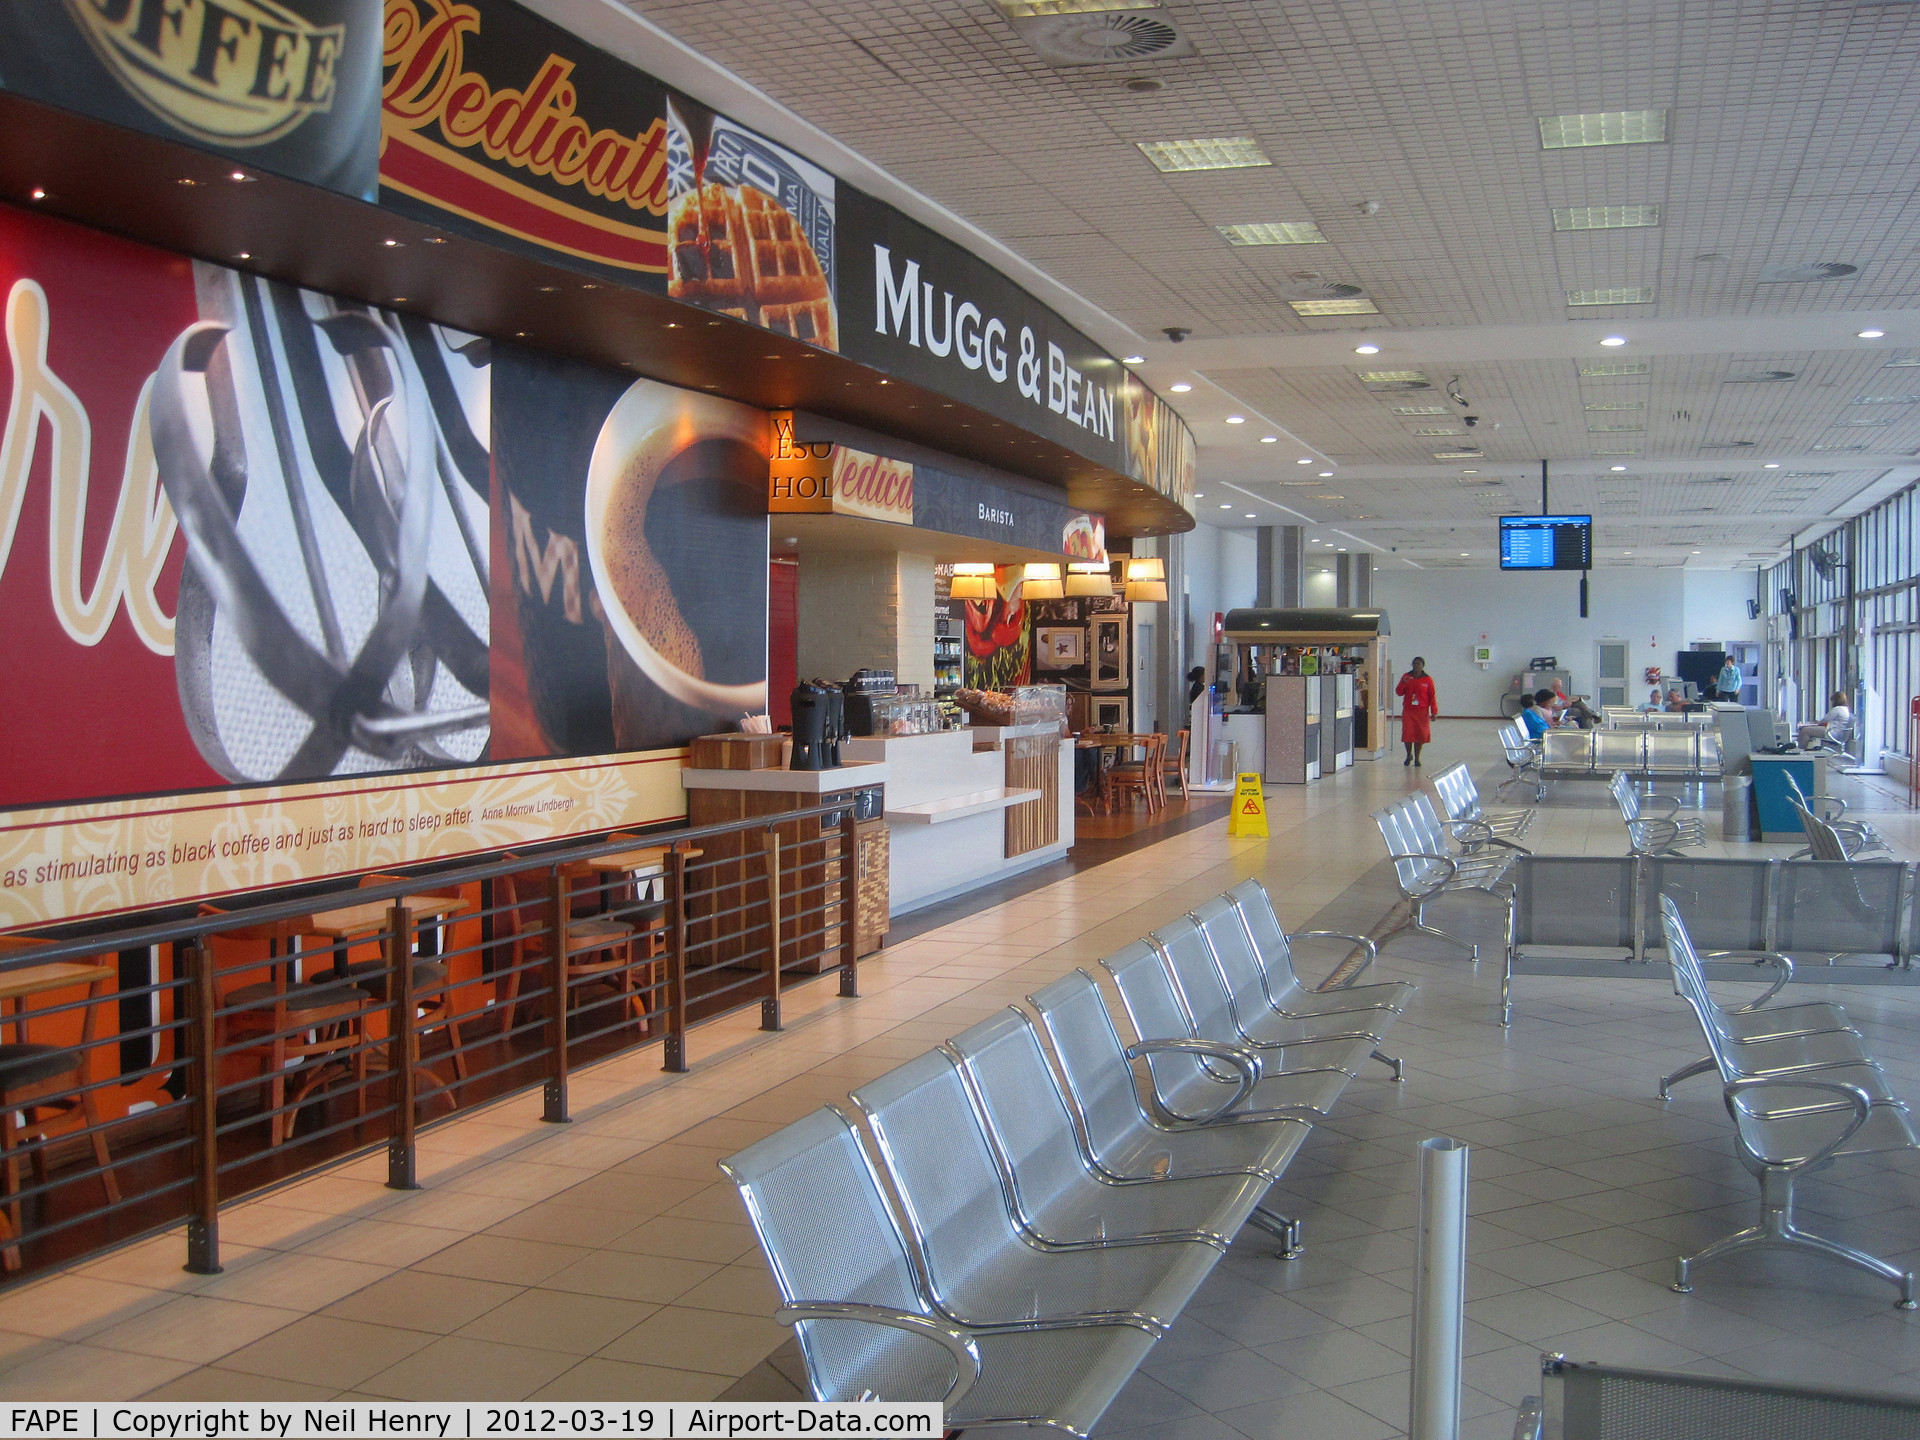 Port Elizabeth Airport, Port Elizabeth South Africa (FAPE) - Inside departure lounge area of Terminal building